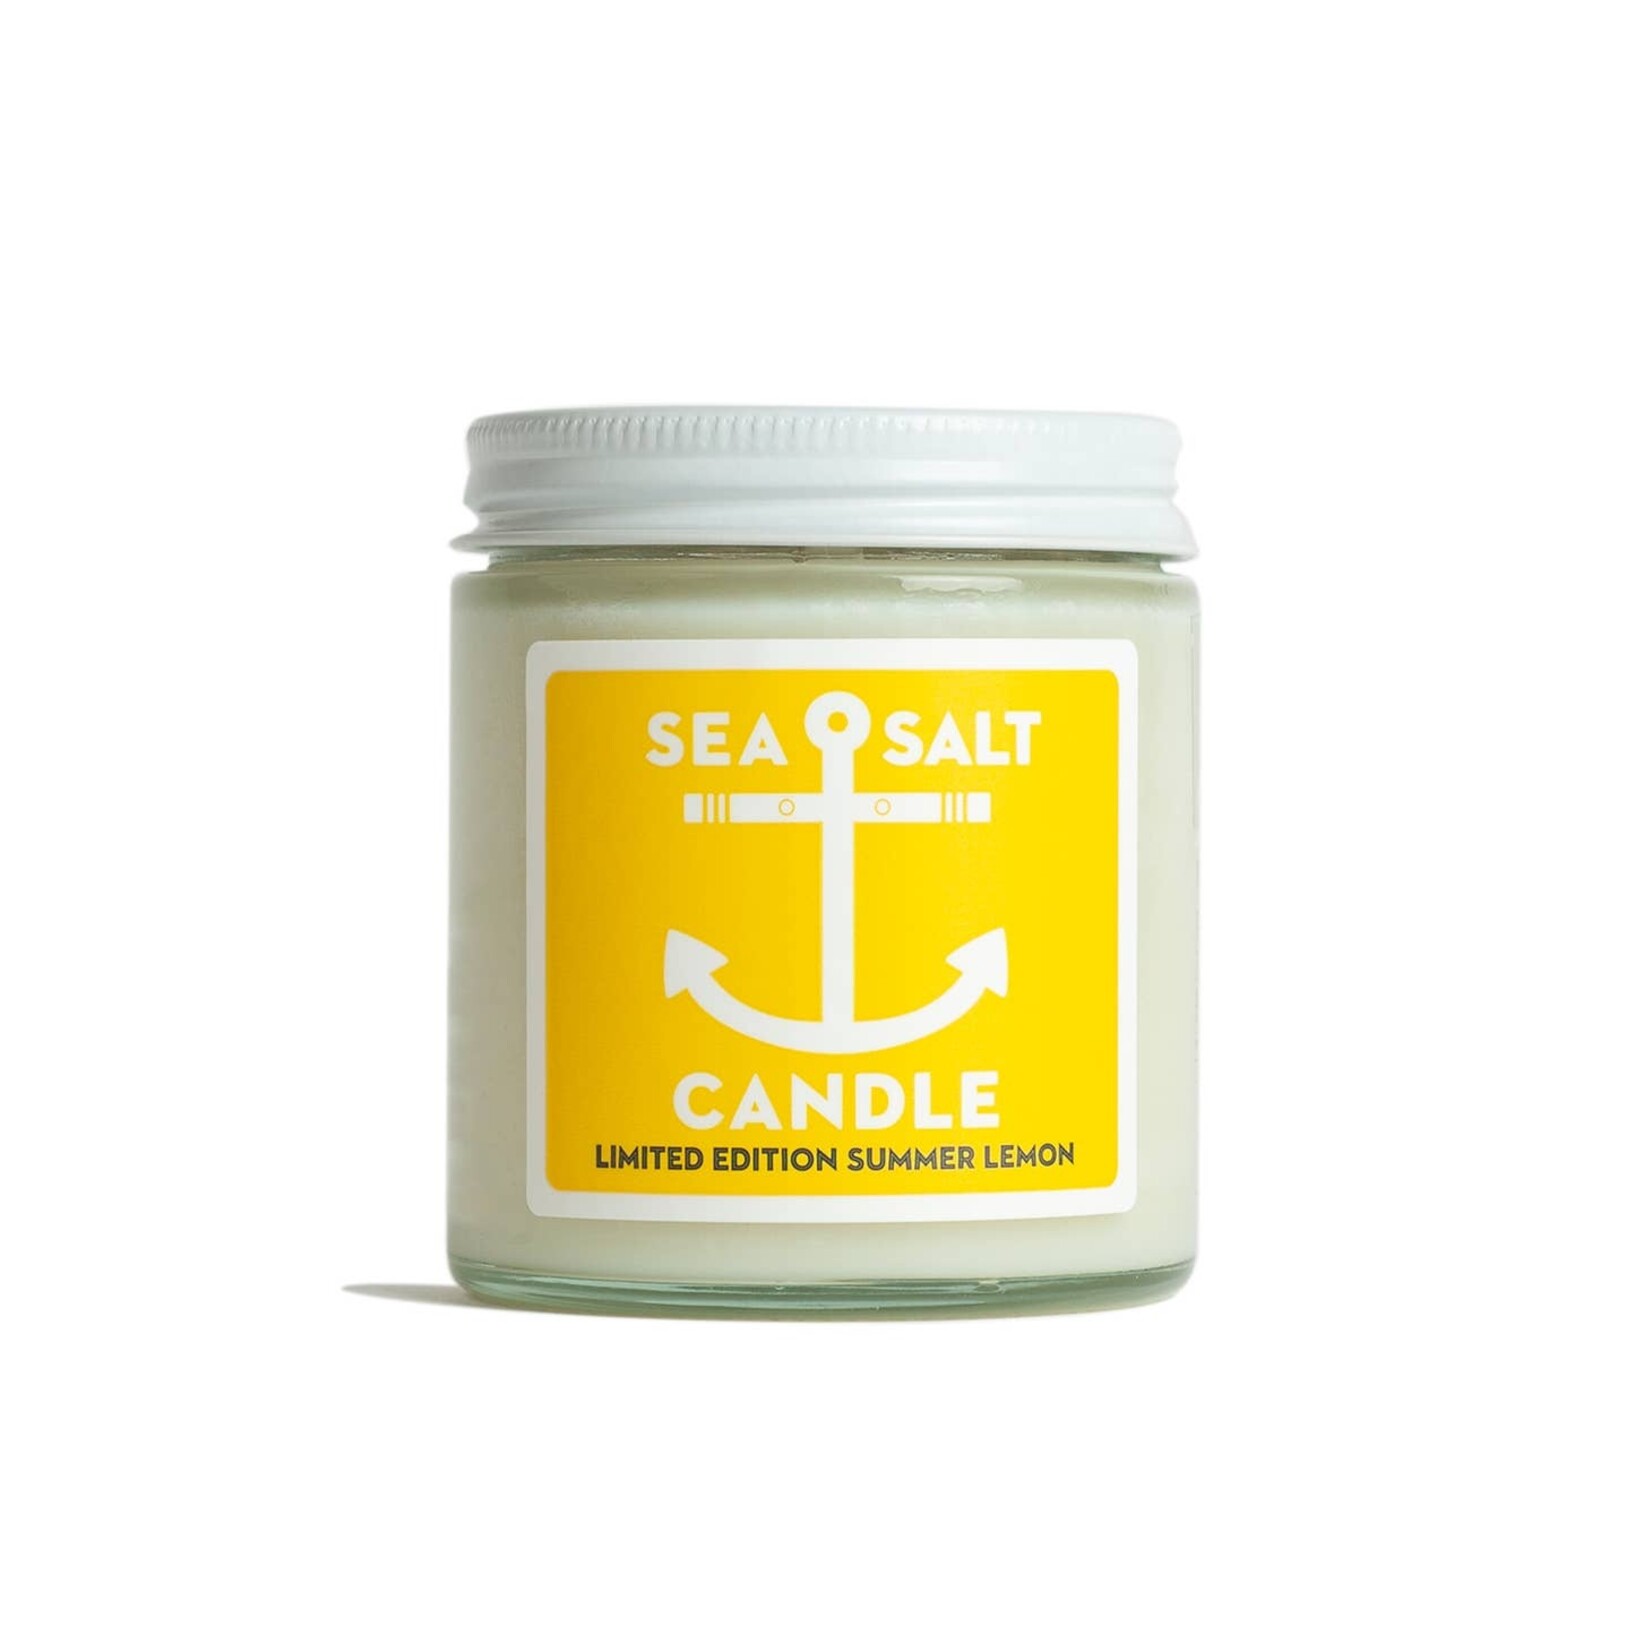 KALASTYLE Sea Salt Summer Lemon Travel Candle